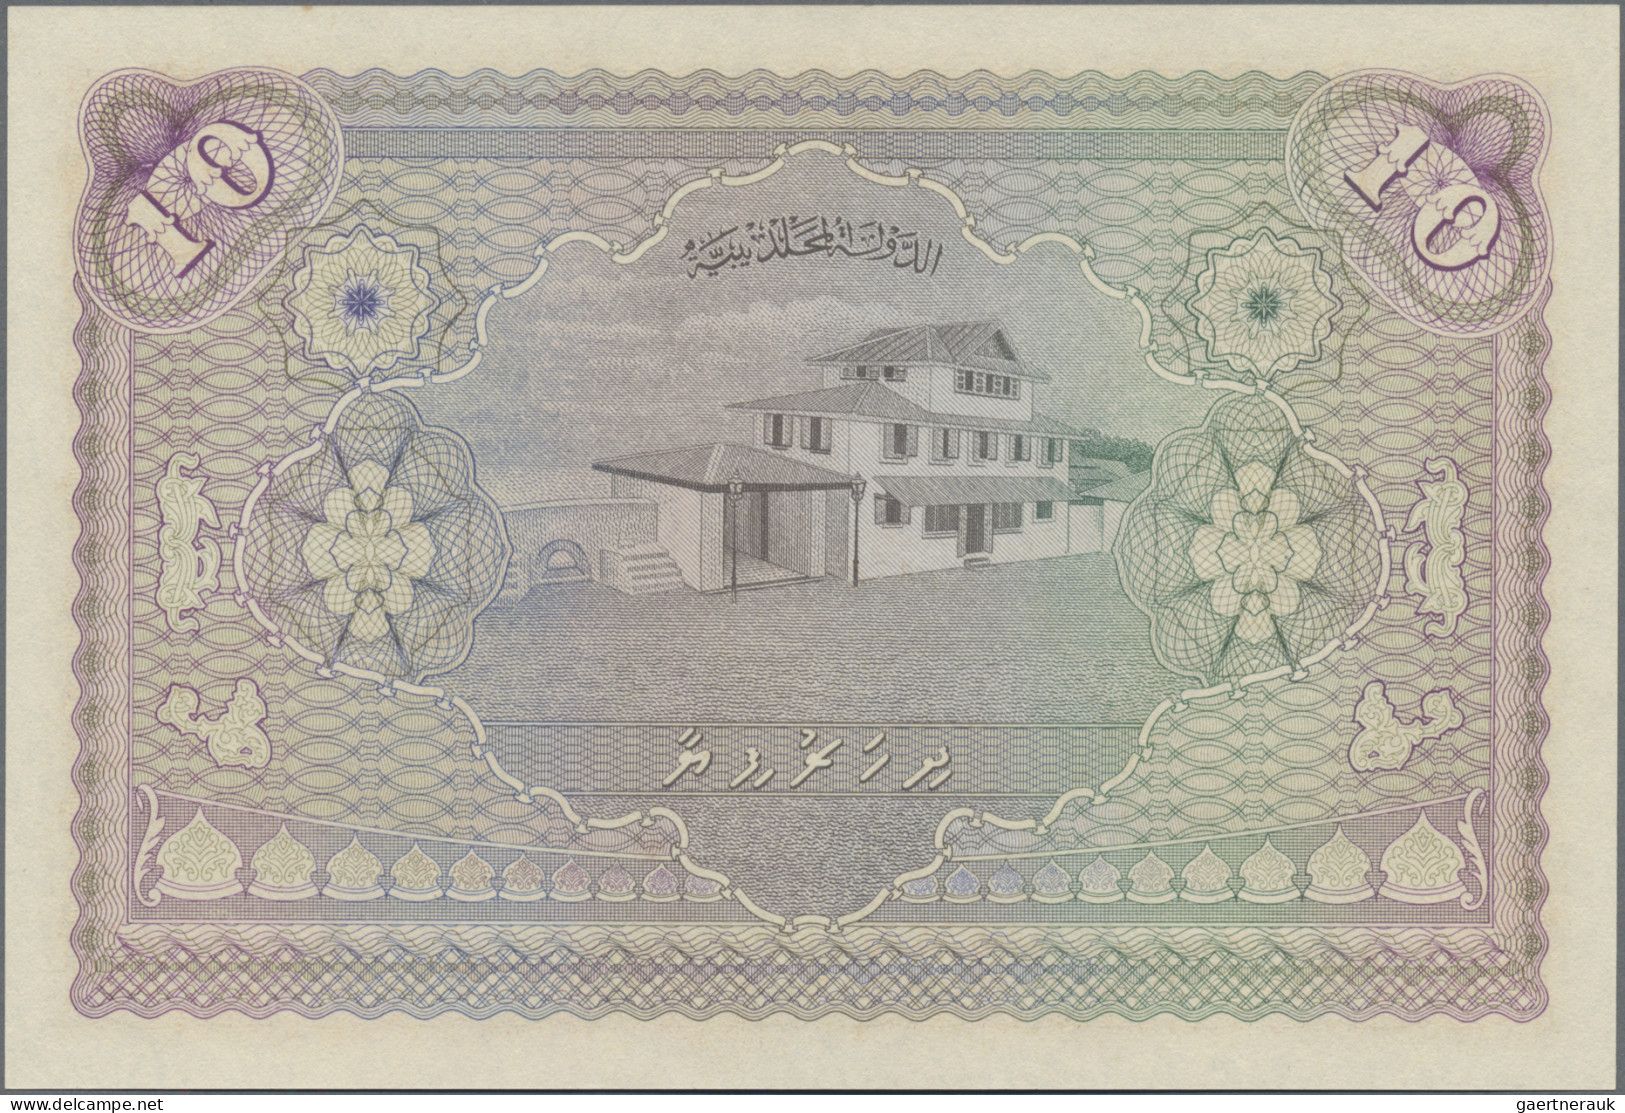 Maldives: Maldivian State / Government Treasurer, lot with 4 banknotes, series 1